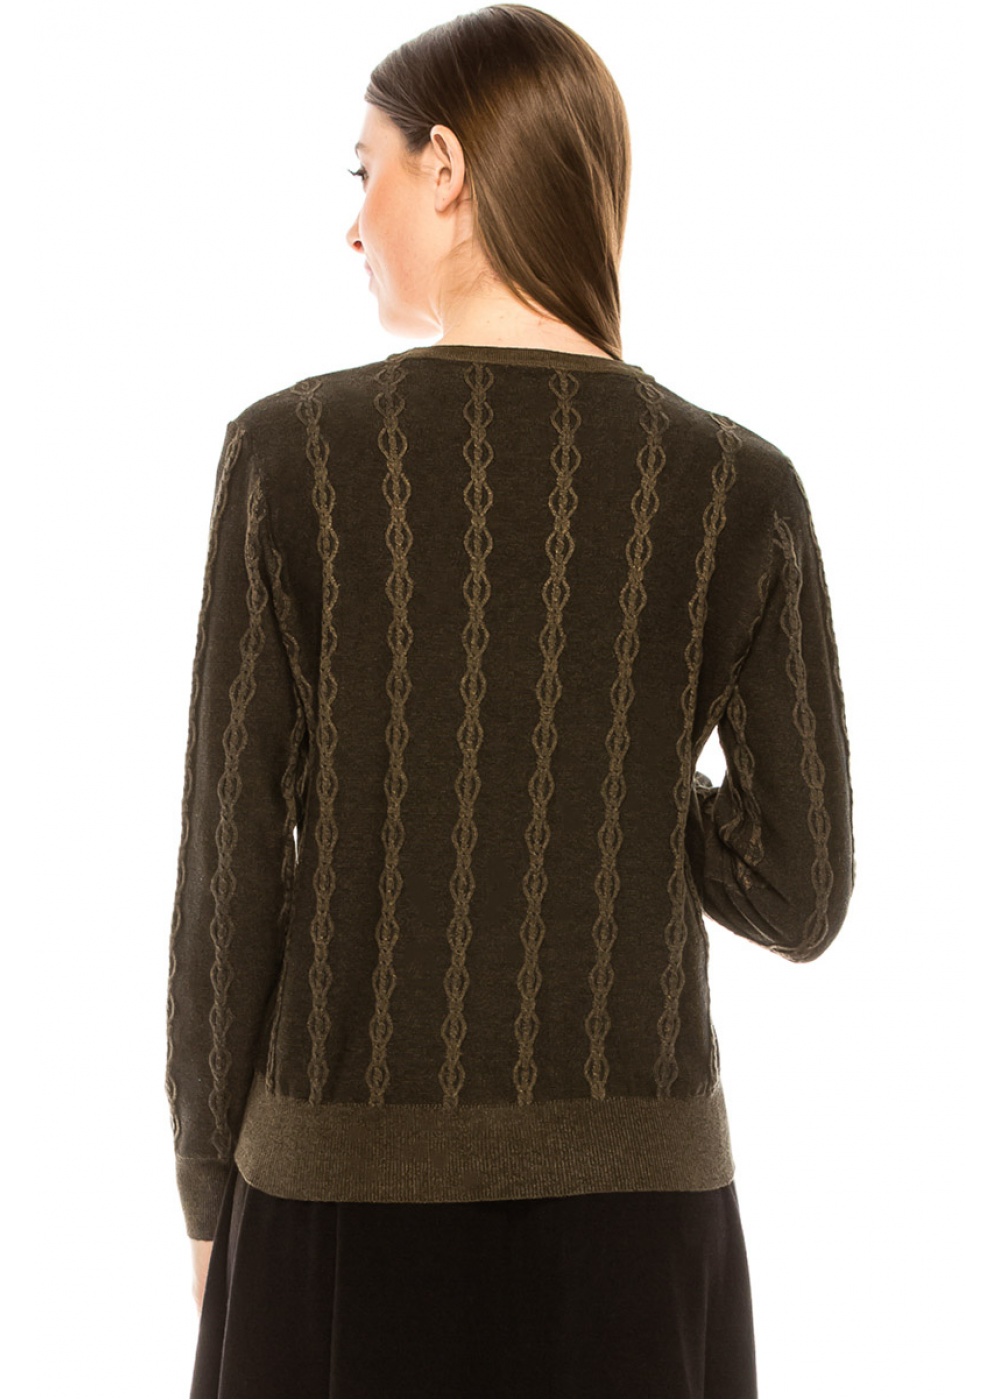 Elegant pattern sweater in olive